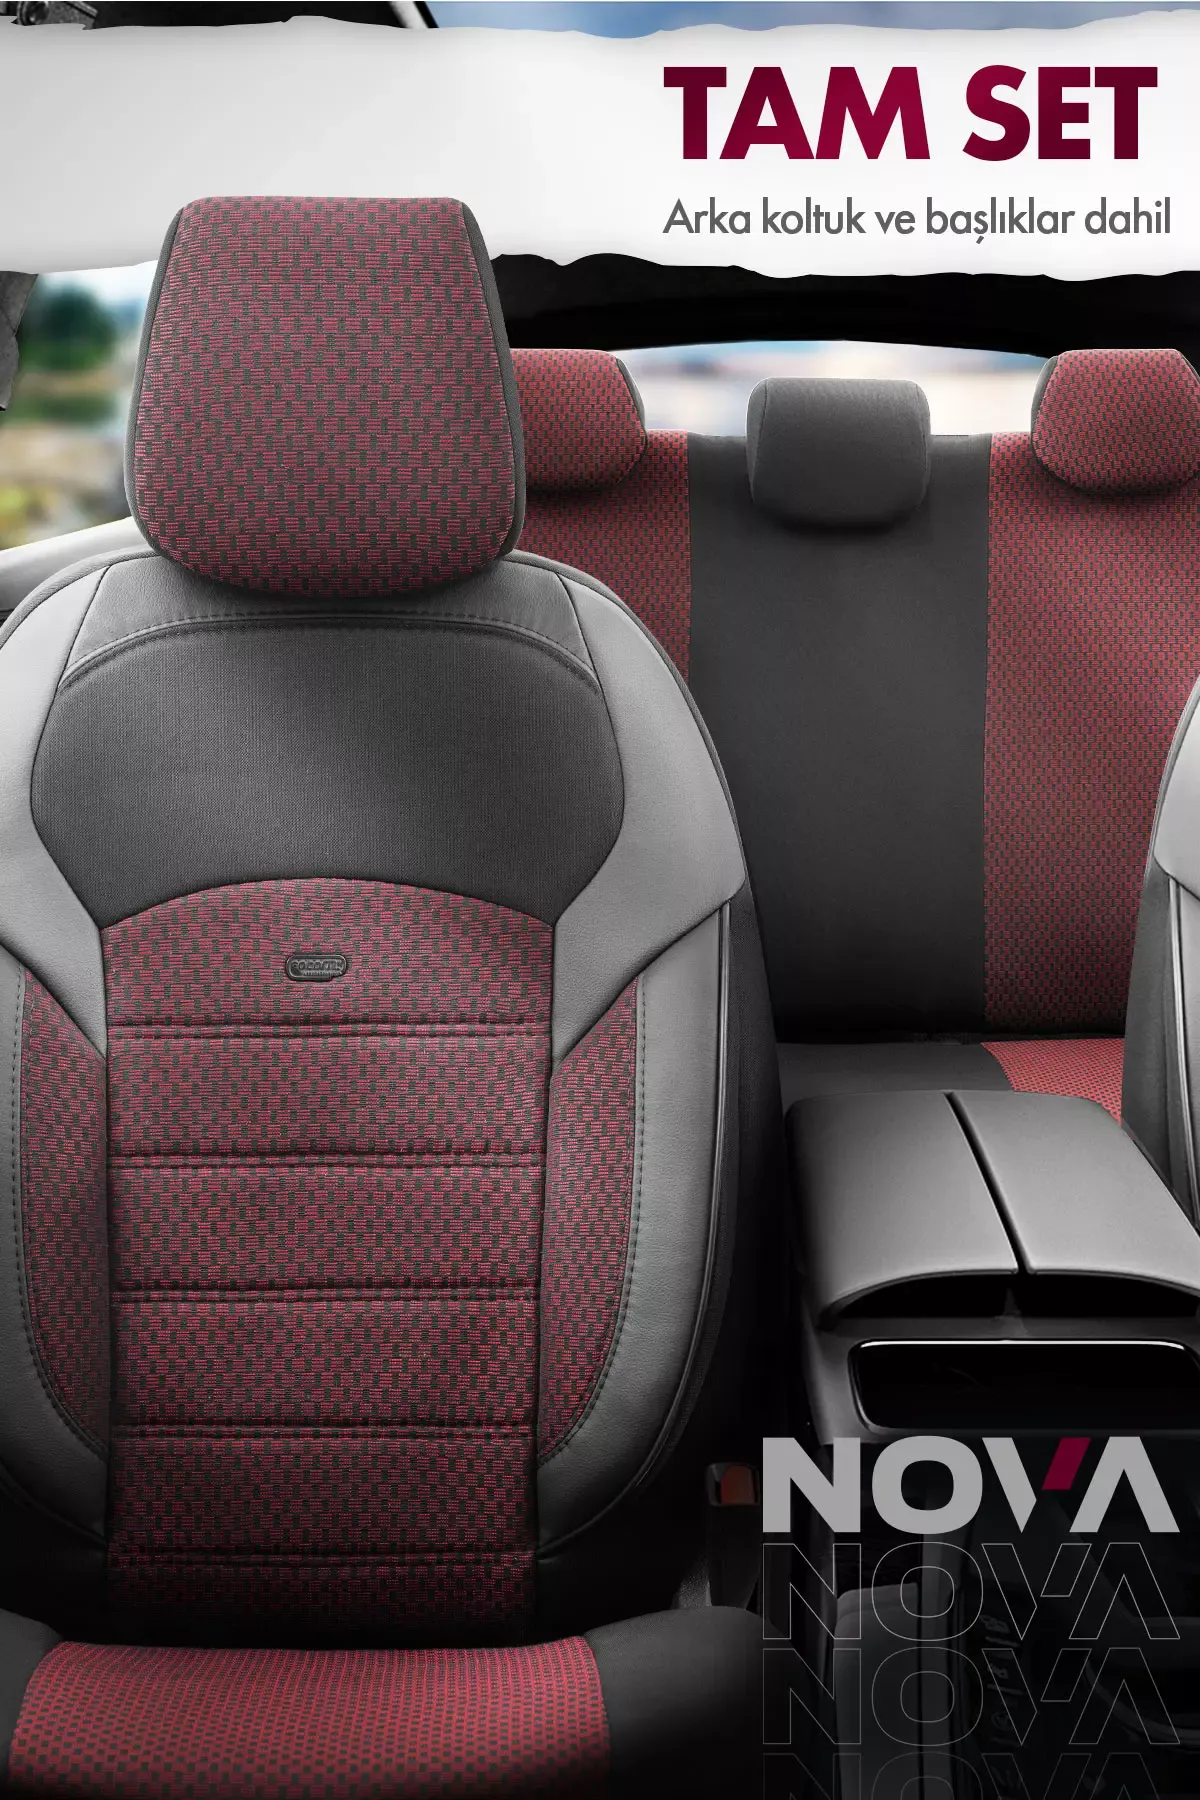 Otom Yeni Nova Design Pamuklu Kumaş Oto Koltuk Kılıfı Tam Set - 11